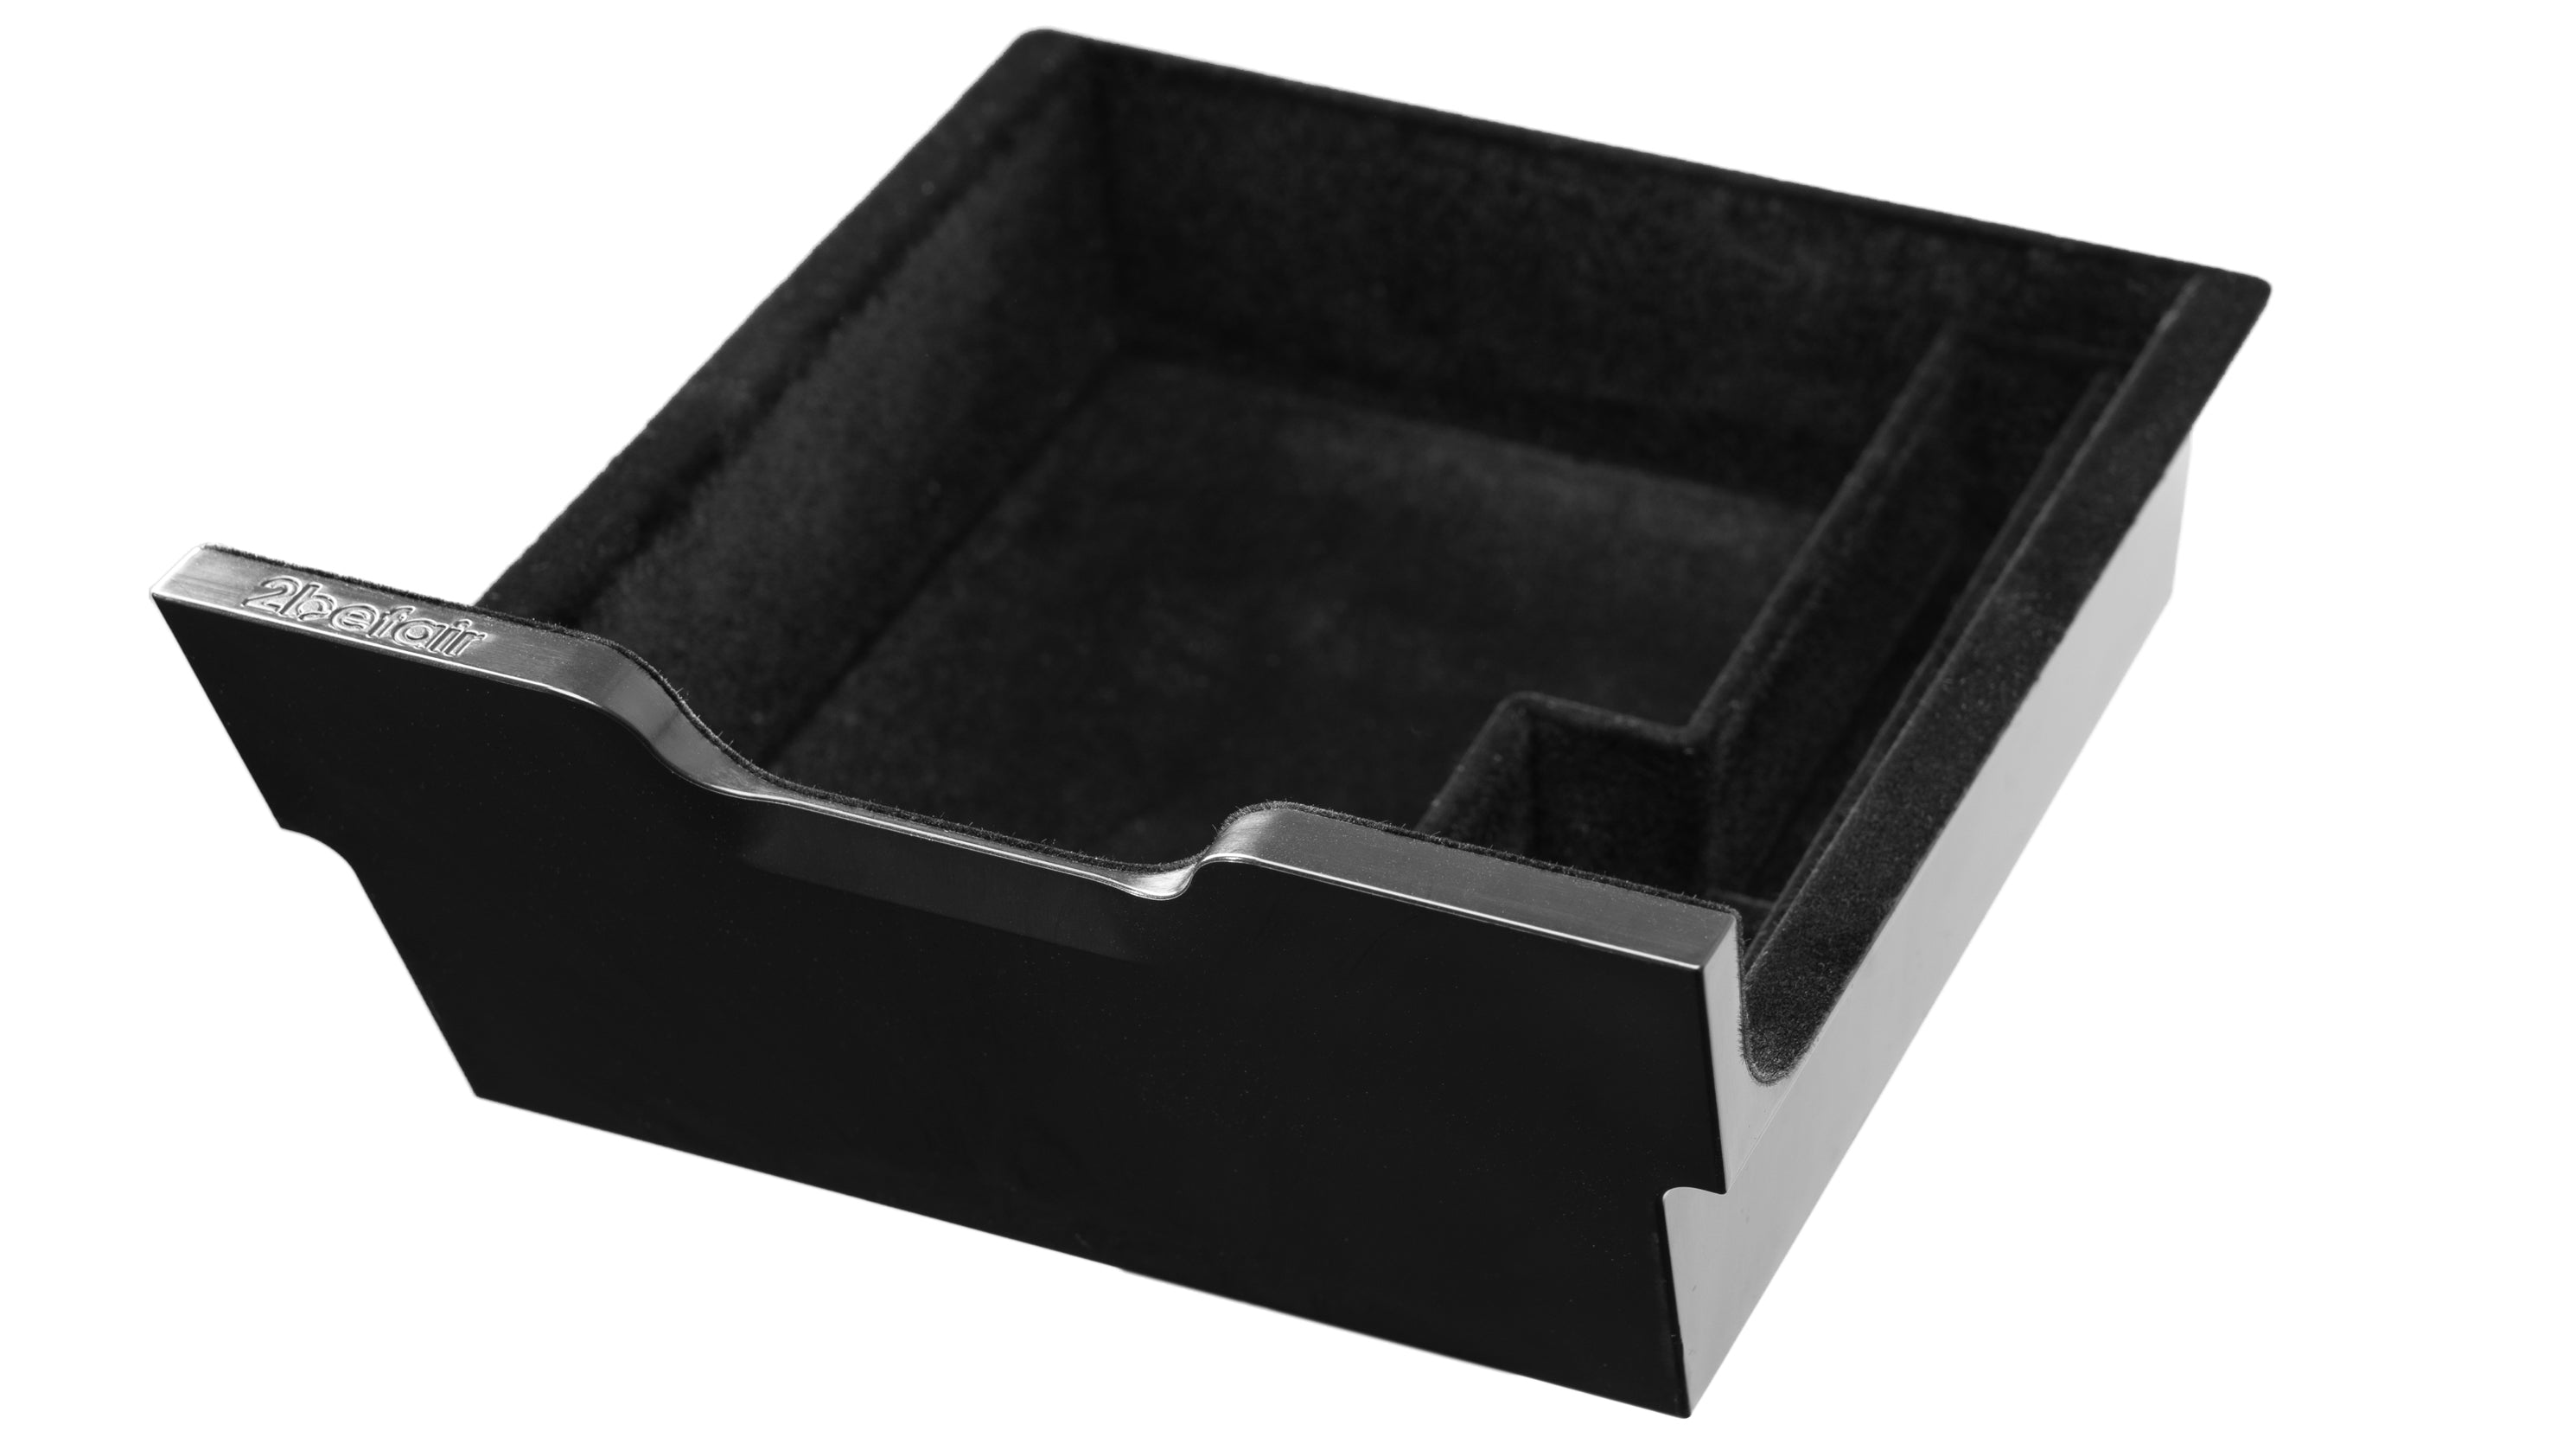 2befair Organizer Box pour la console centrale de la Tesla Model 3/Y